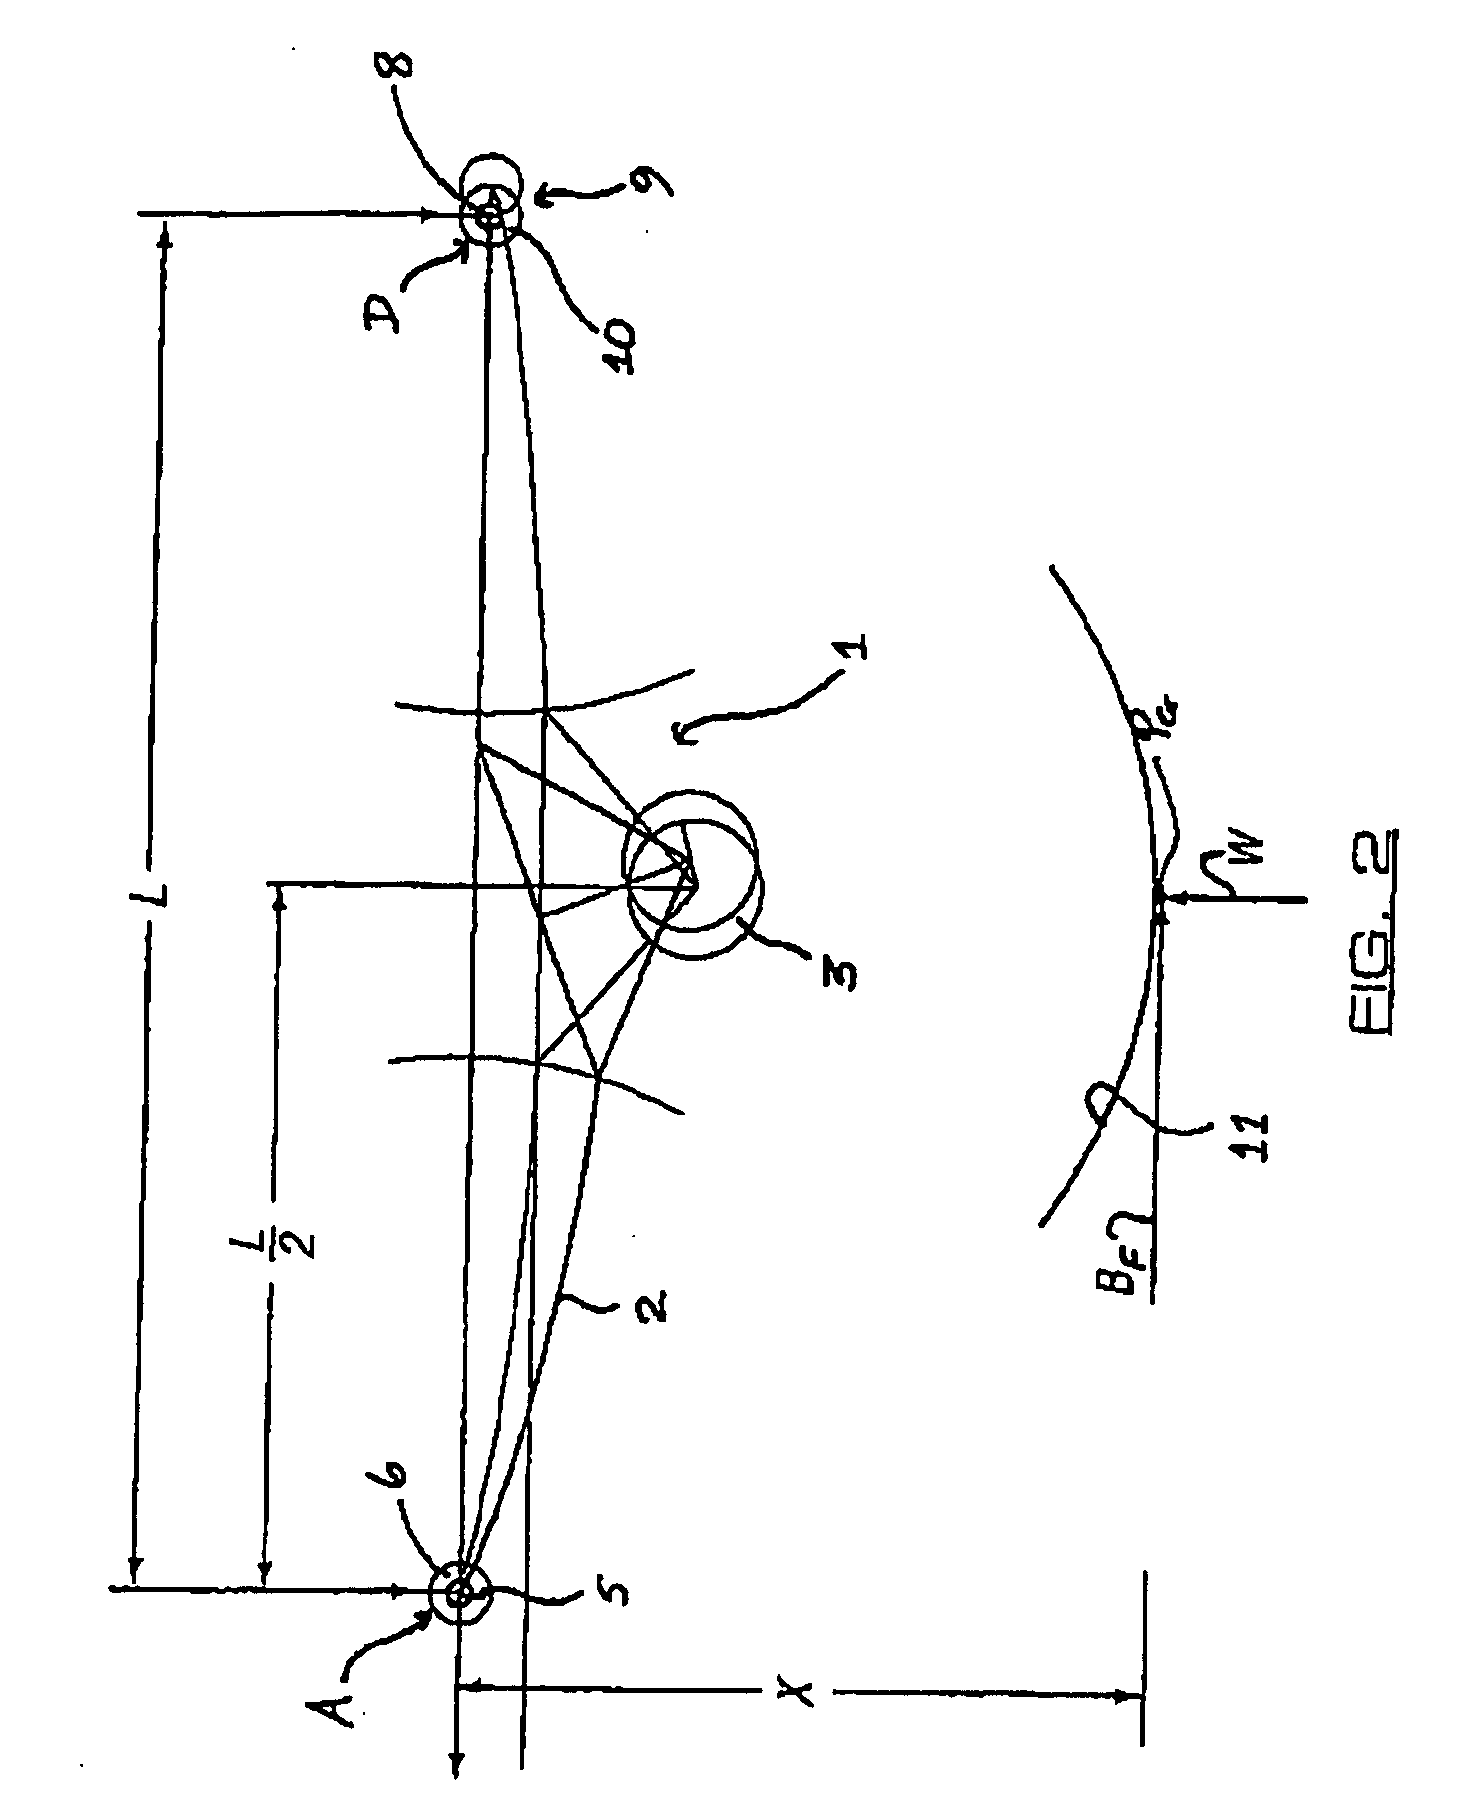 Vehicle leaf spring suspension with radius arms